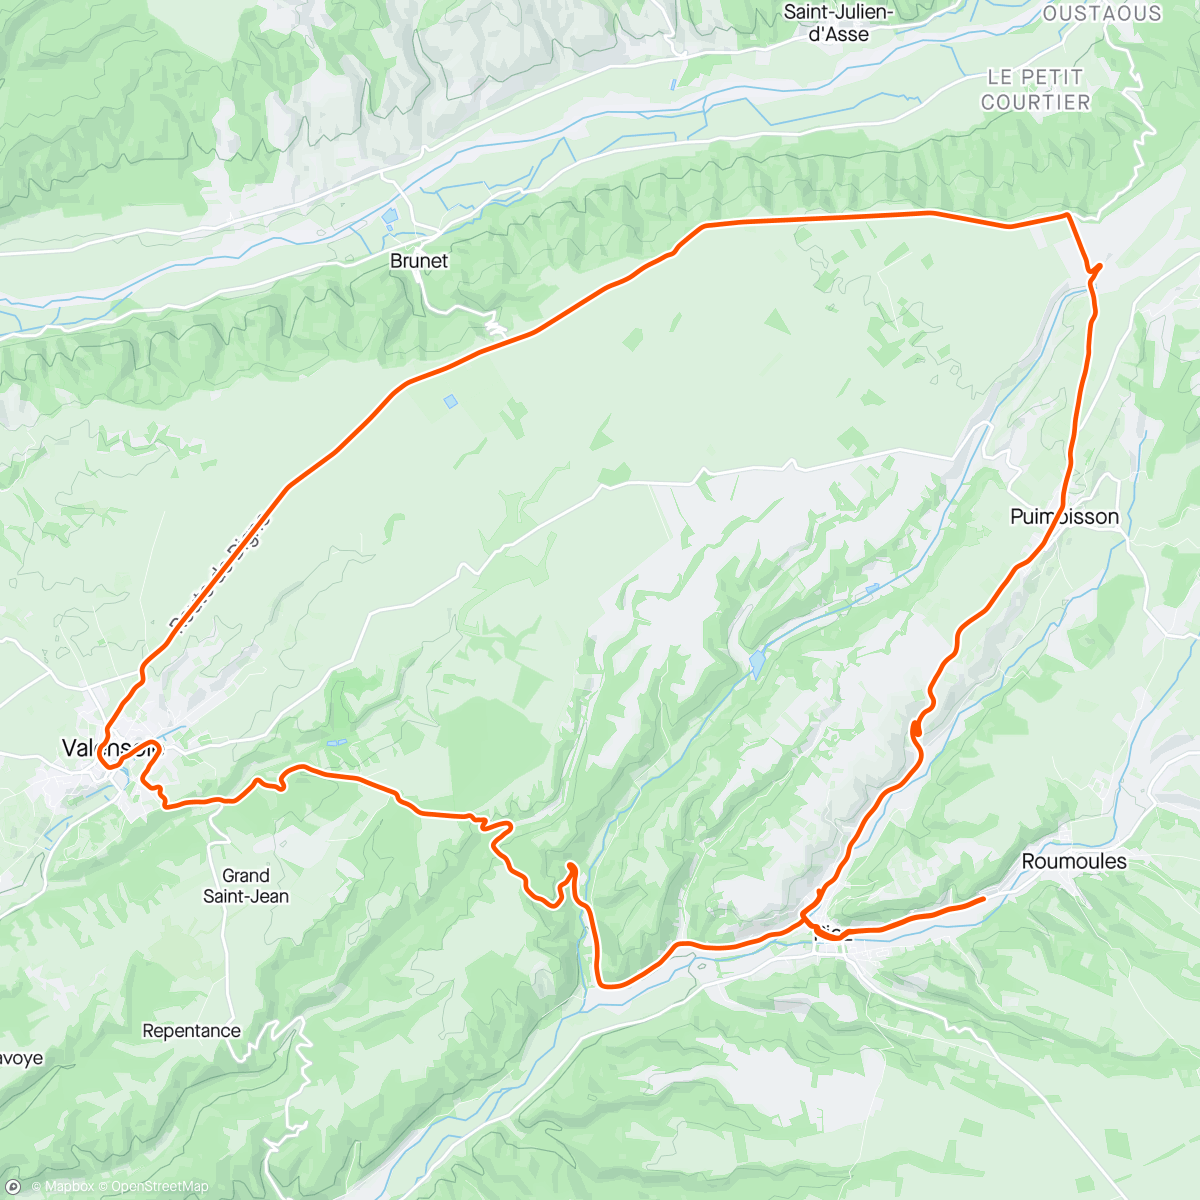 「Plateau de Valensole」活動的地圖